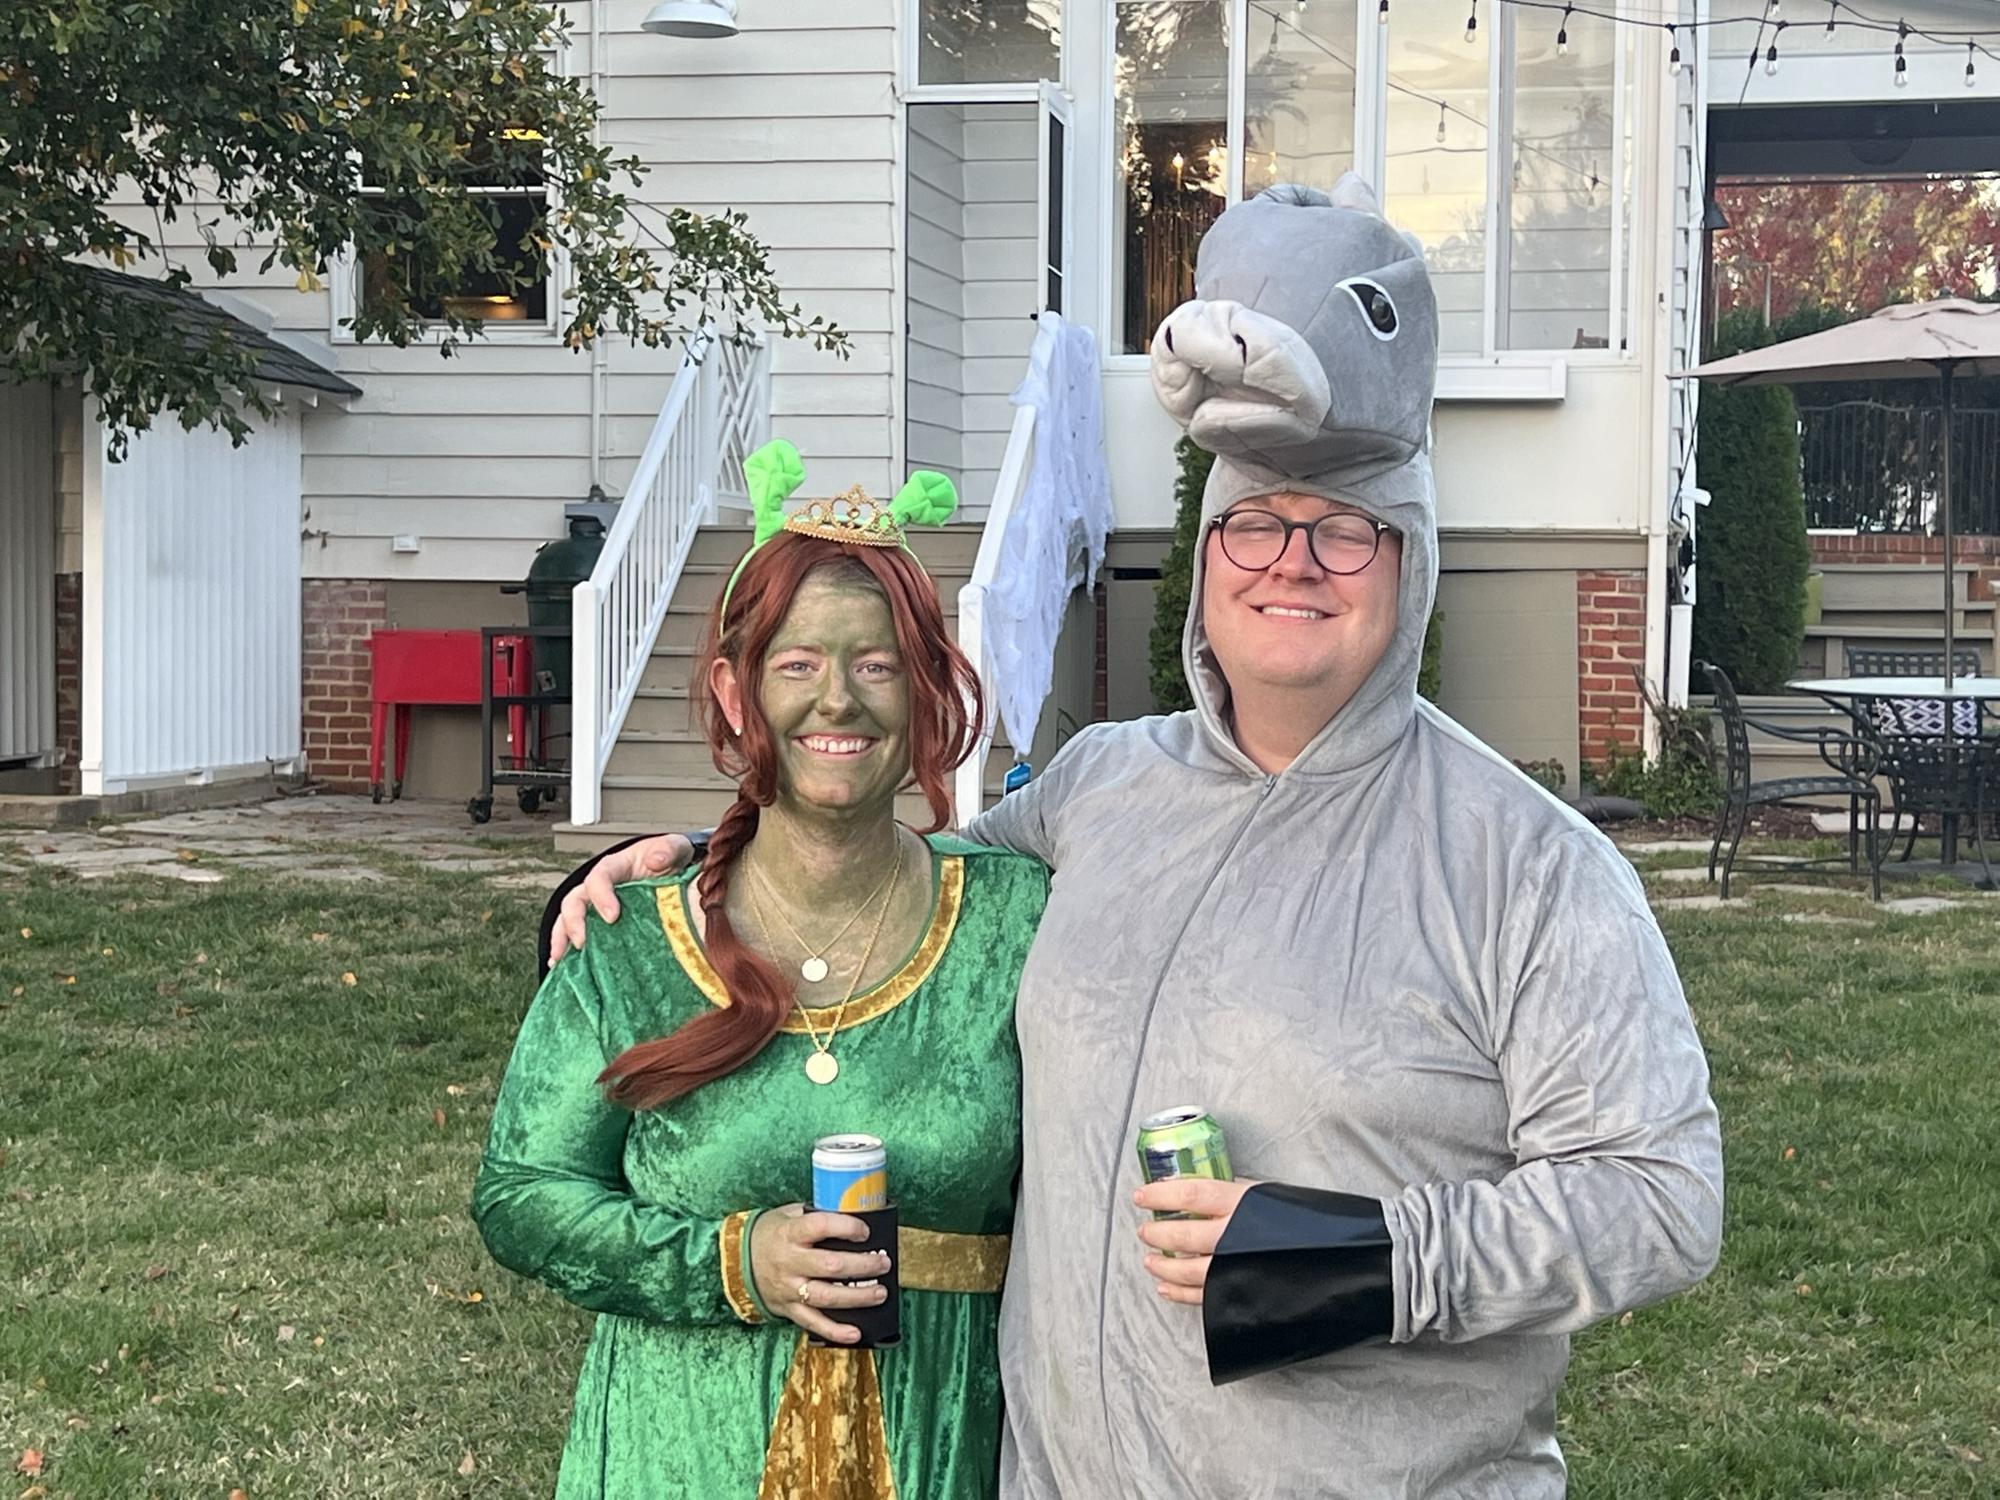 Princess Fiona (ogre version) and Donkey, Halloween 2022.